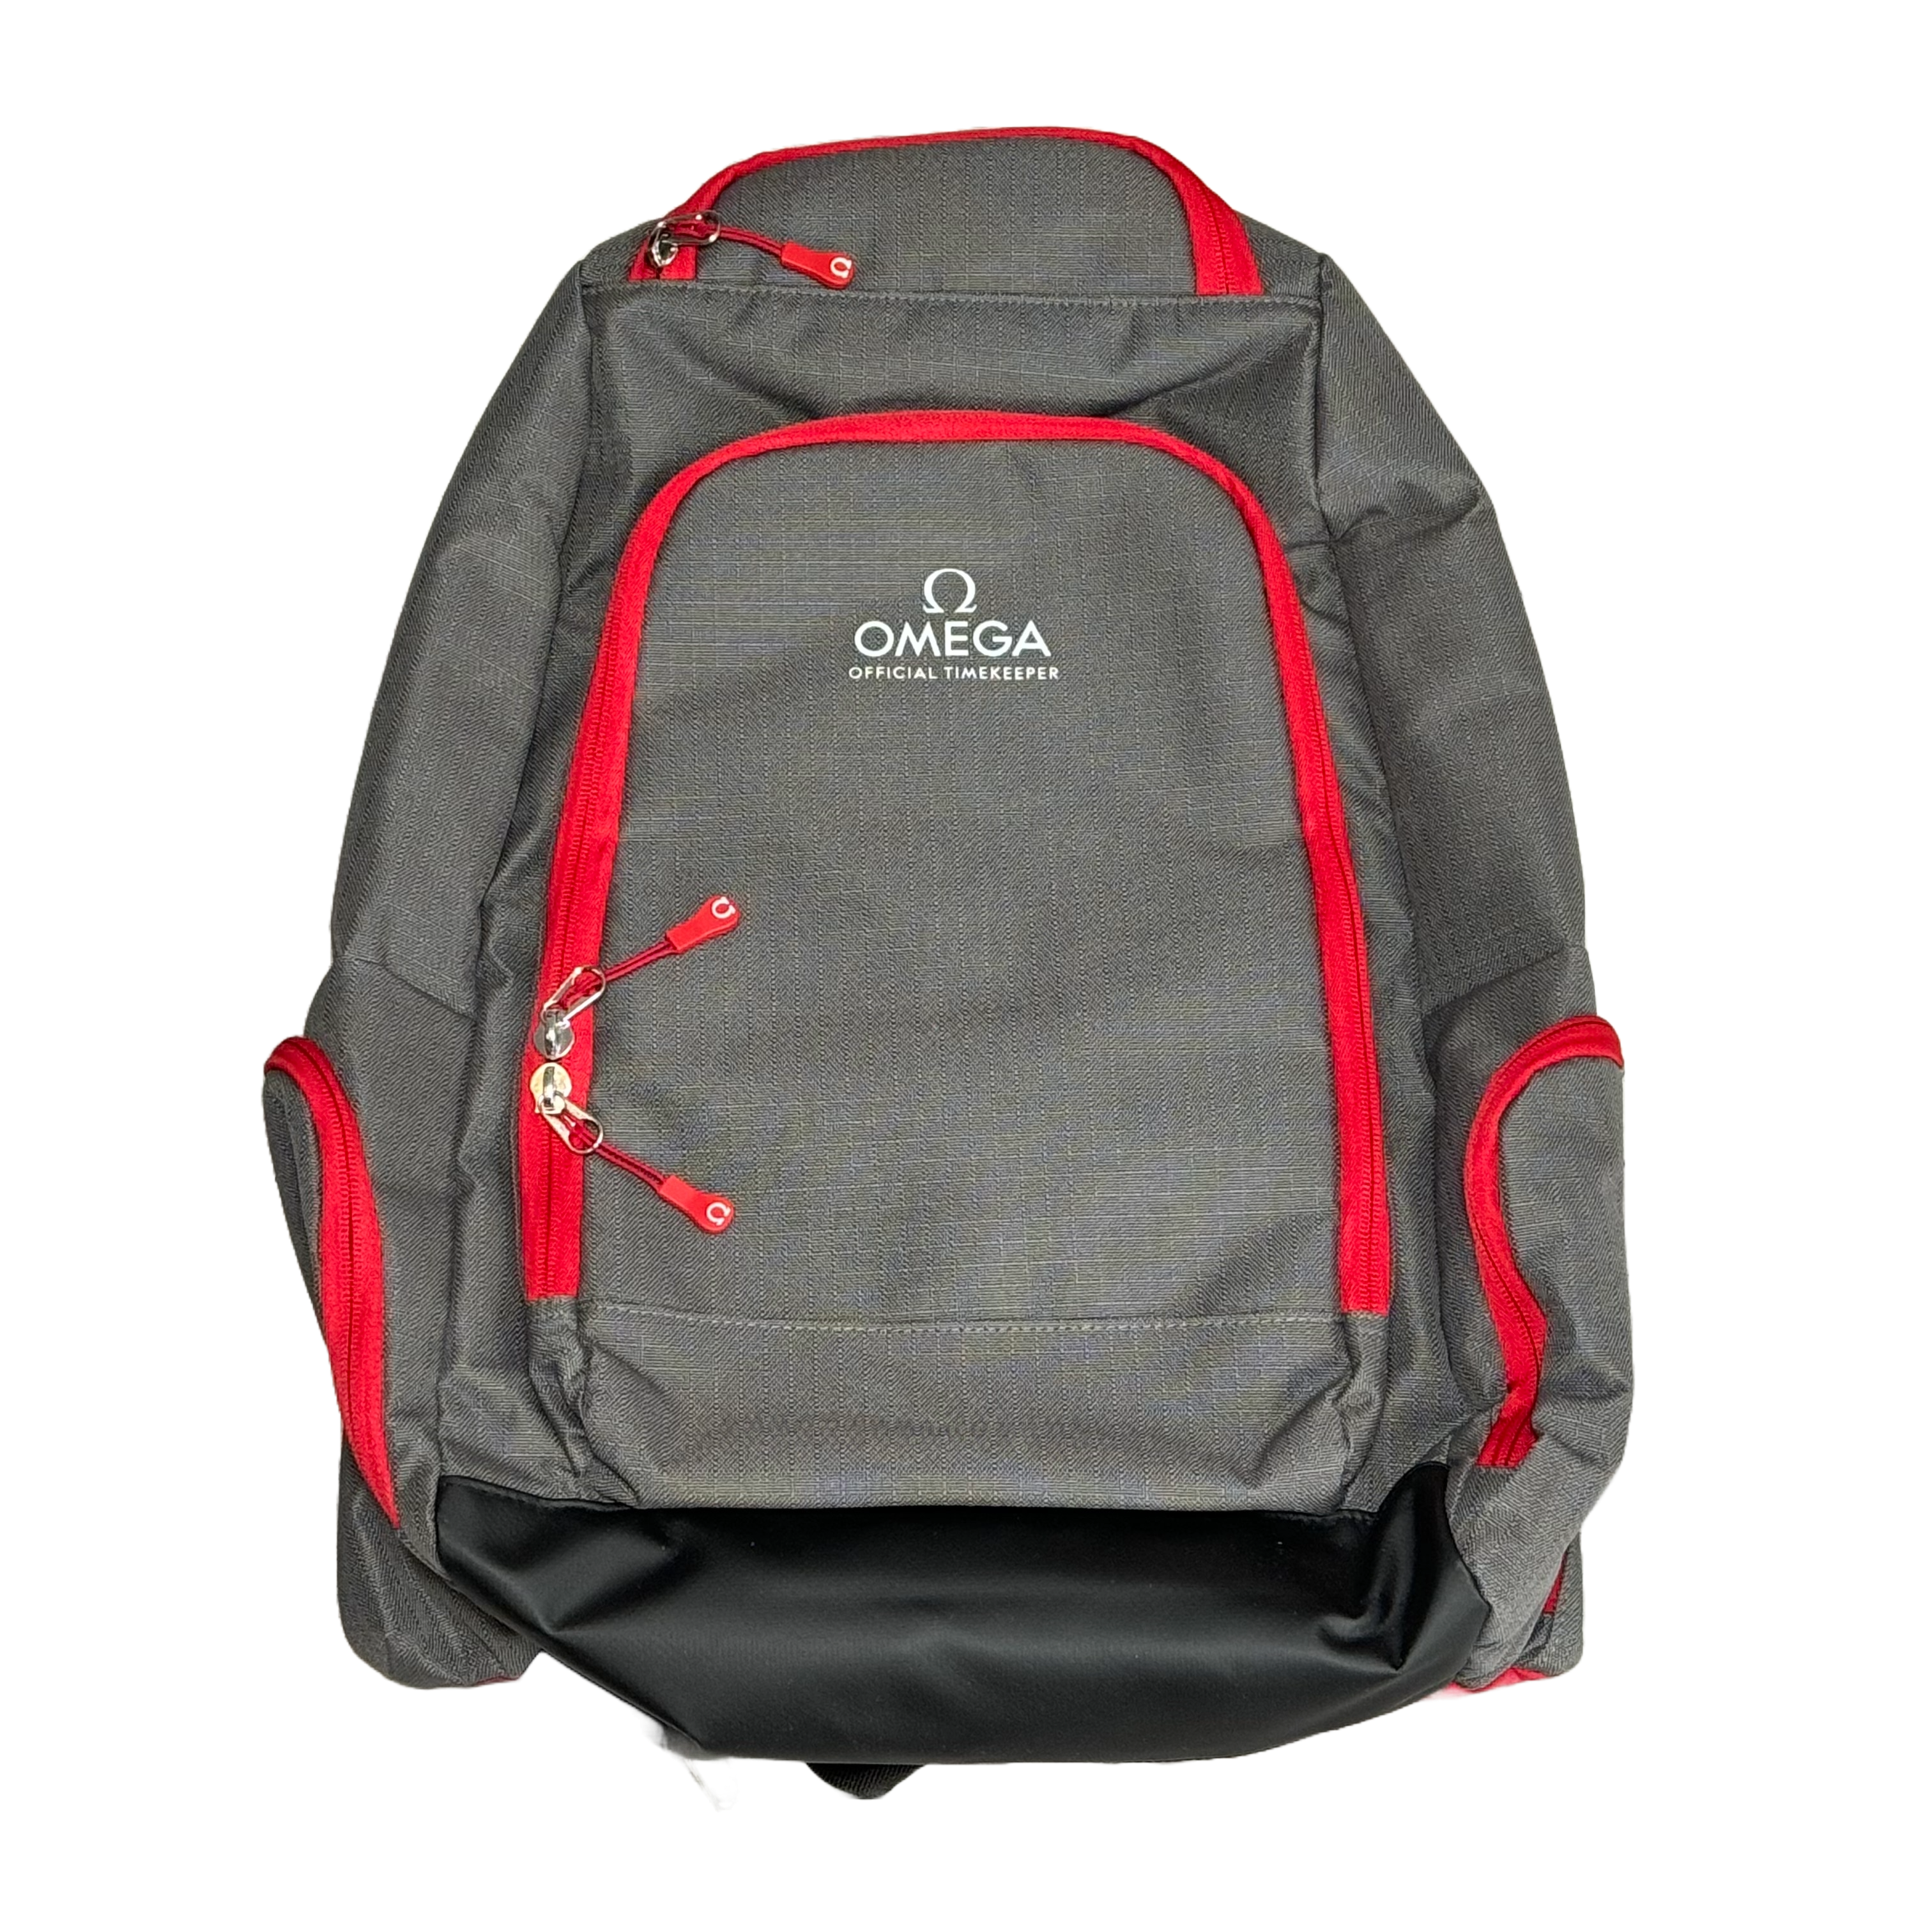  Omega Rucksack Tasche backpack Graun grey